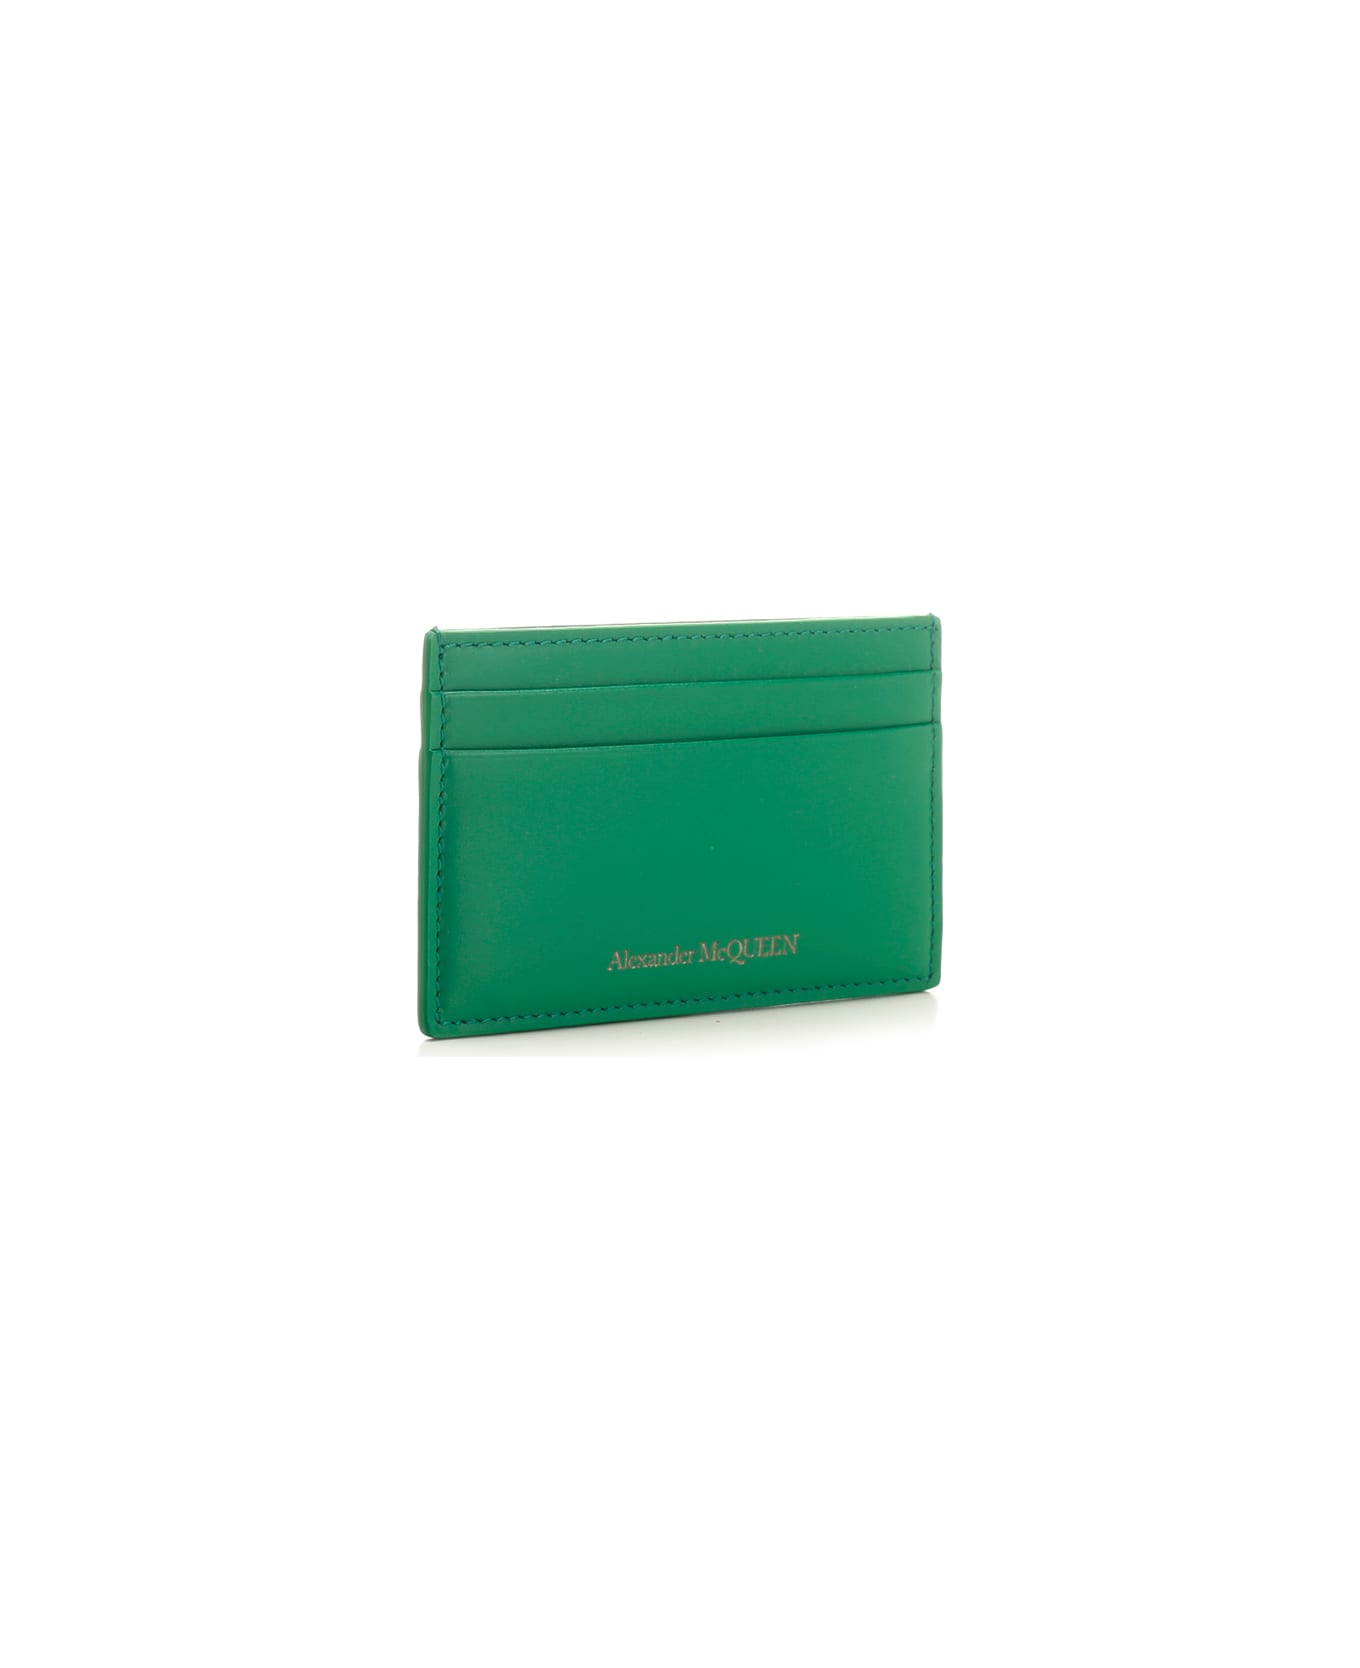 Alexander McQueen Leather Card Holder - VERDE